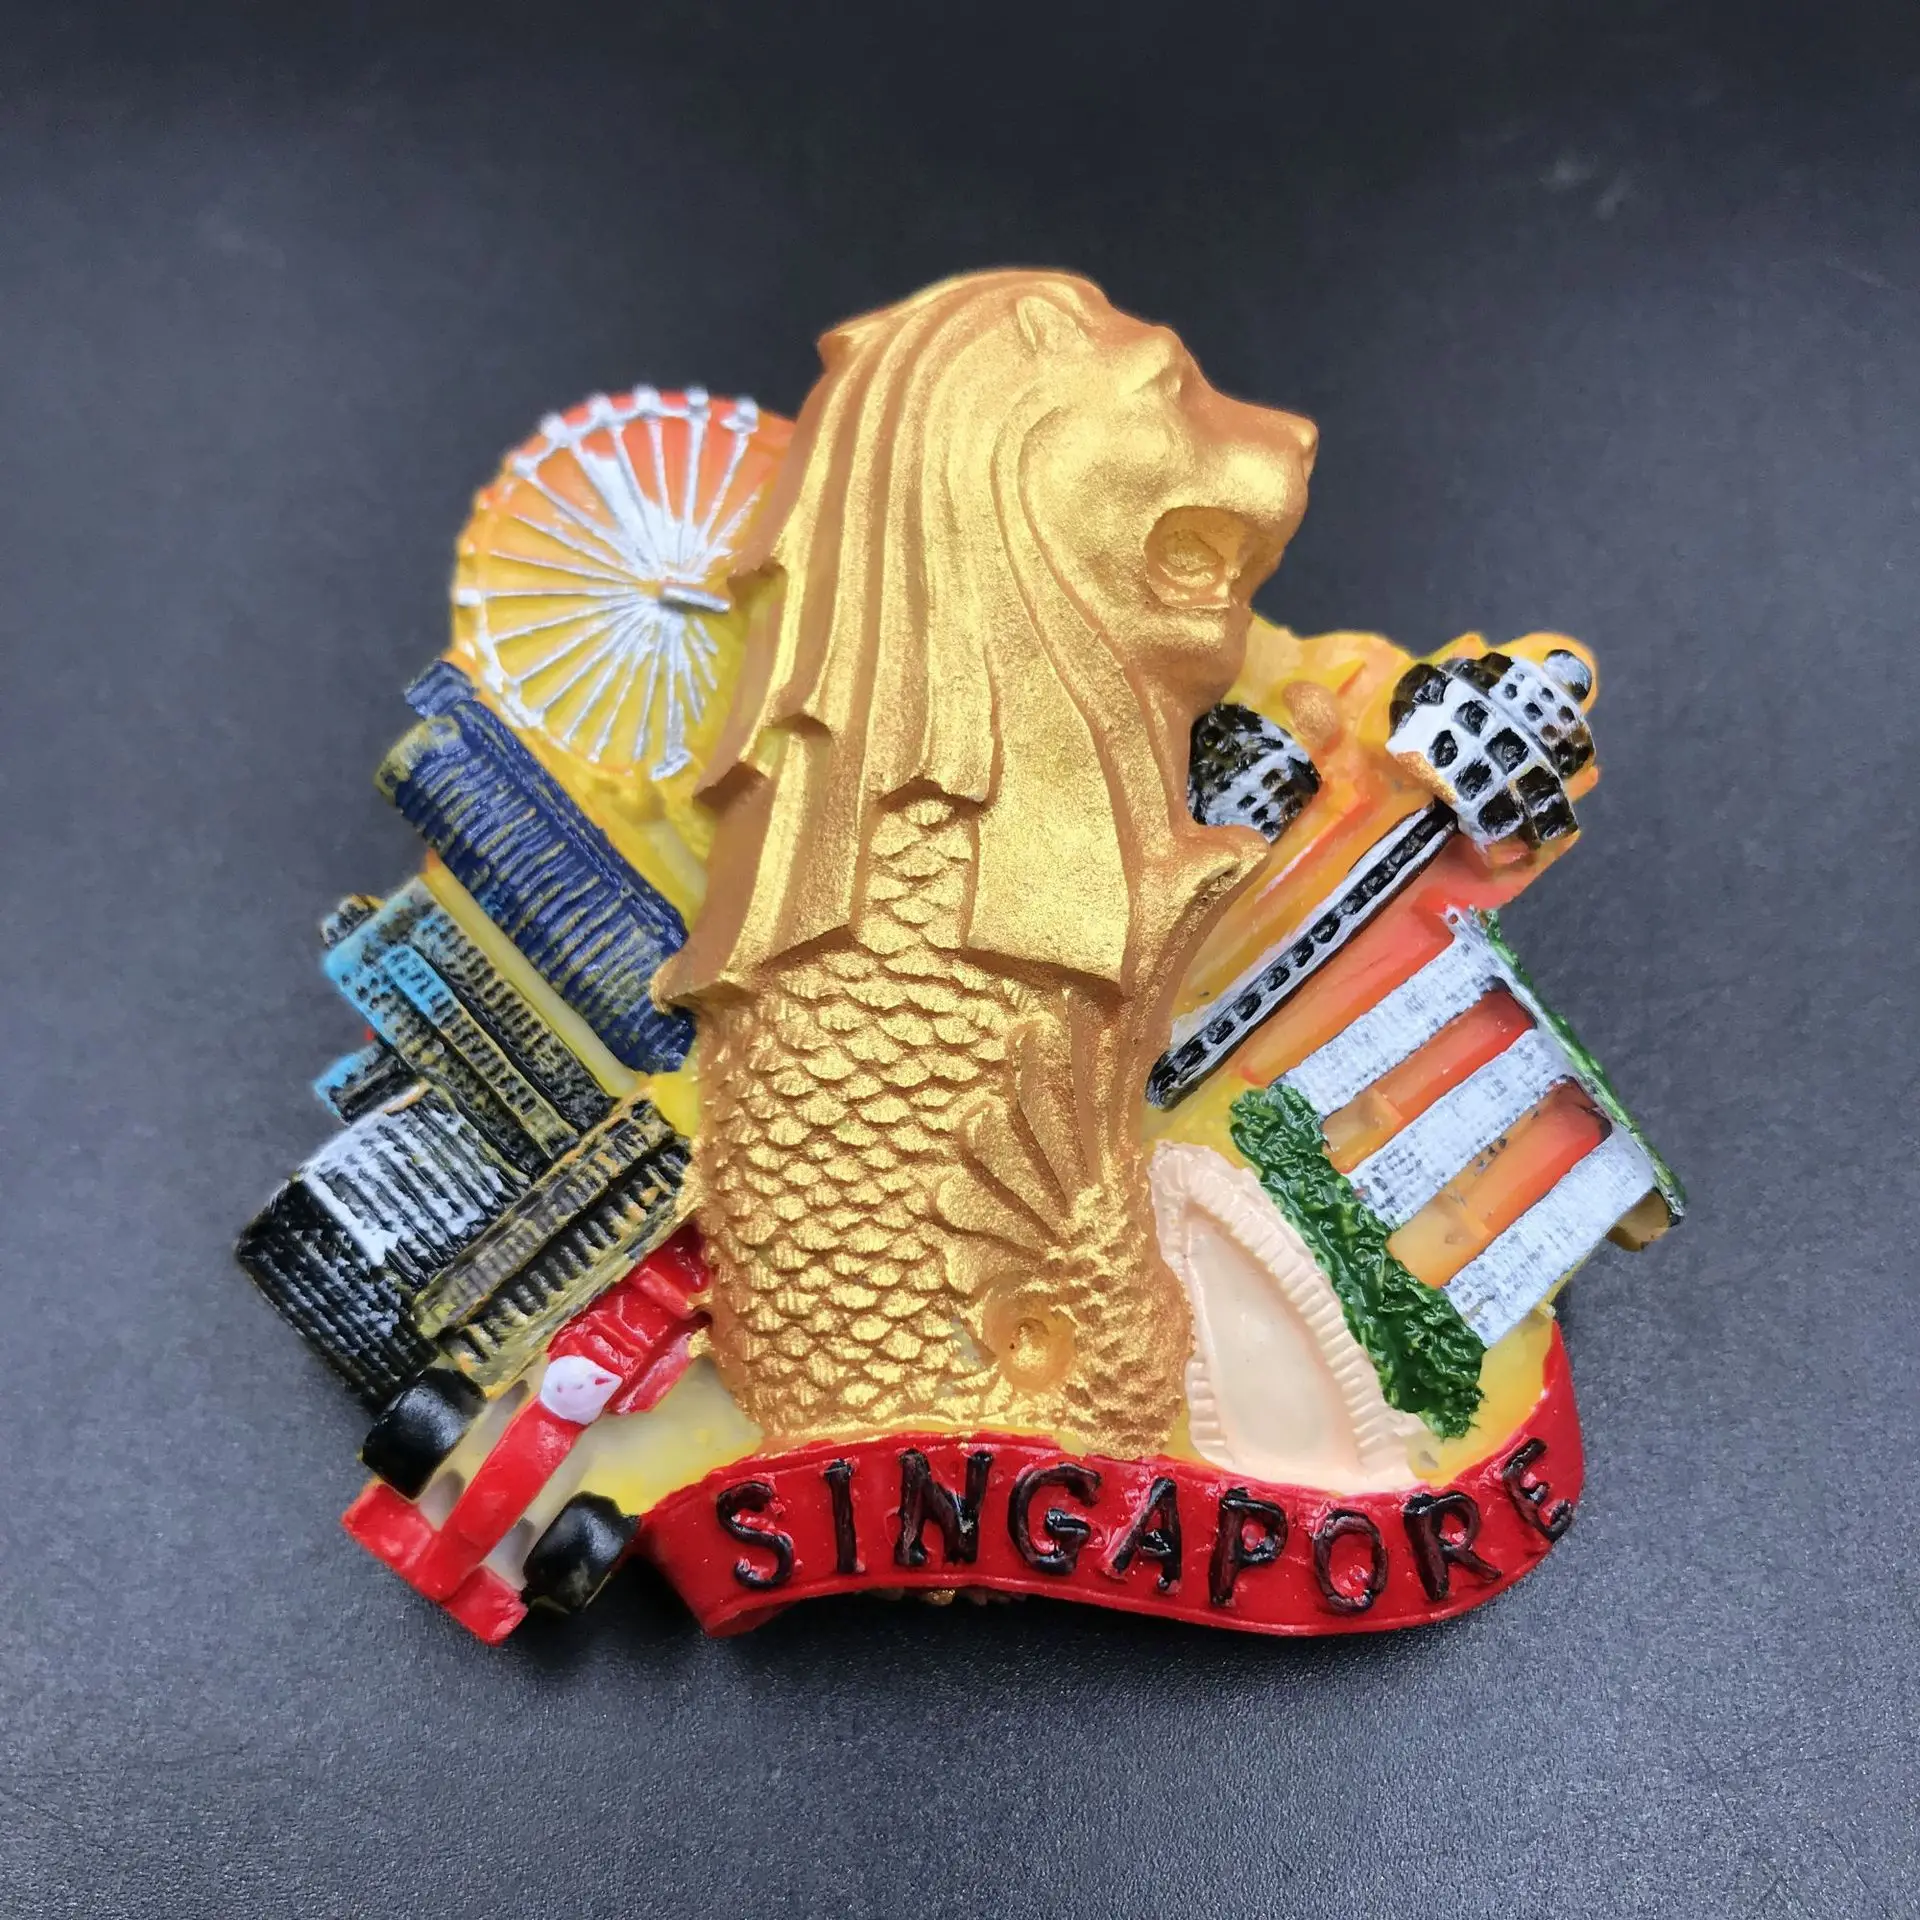 Phuket Thailand Сингапур Merlion, Таиланд, Венеция, Италия, Сан-Diego, США, холодильник, магнитный сувенир, бутик, подарки для путешествий